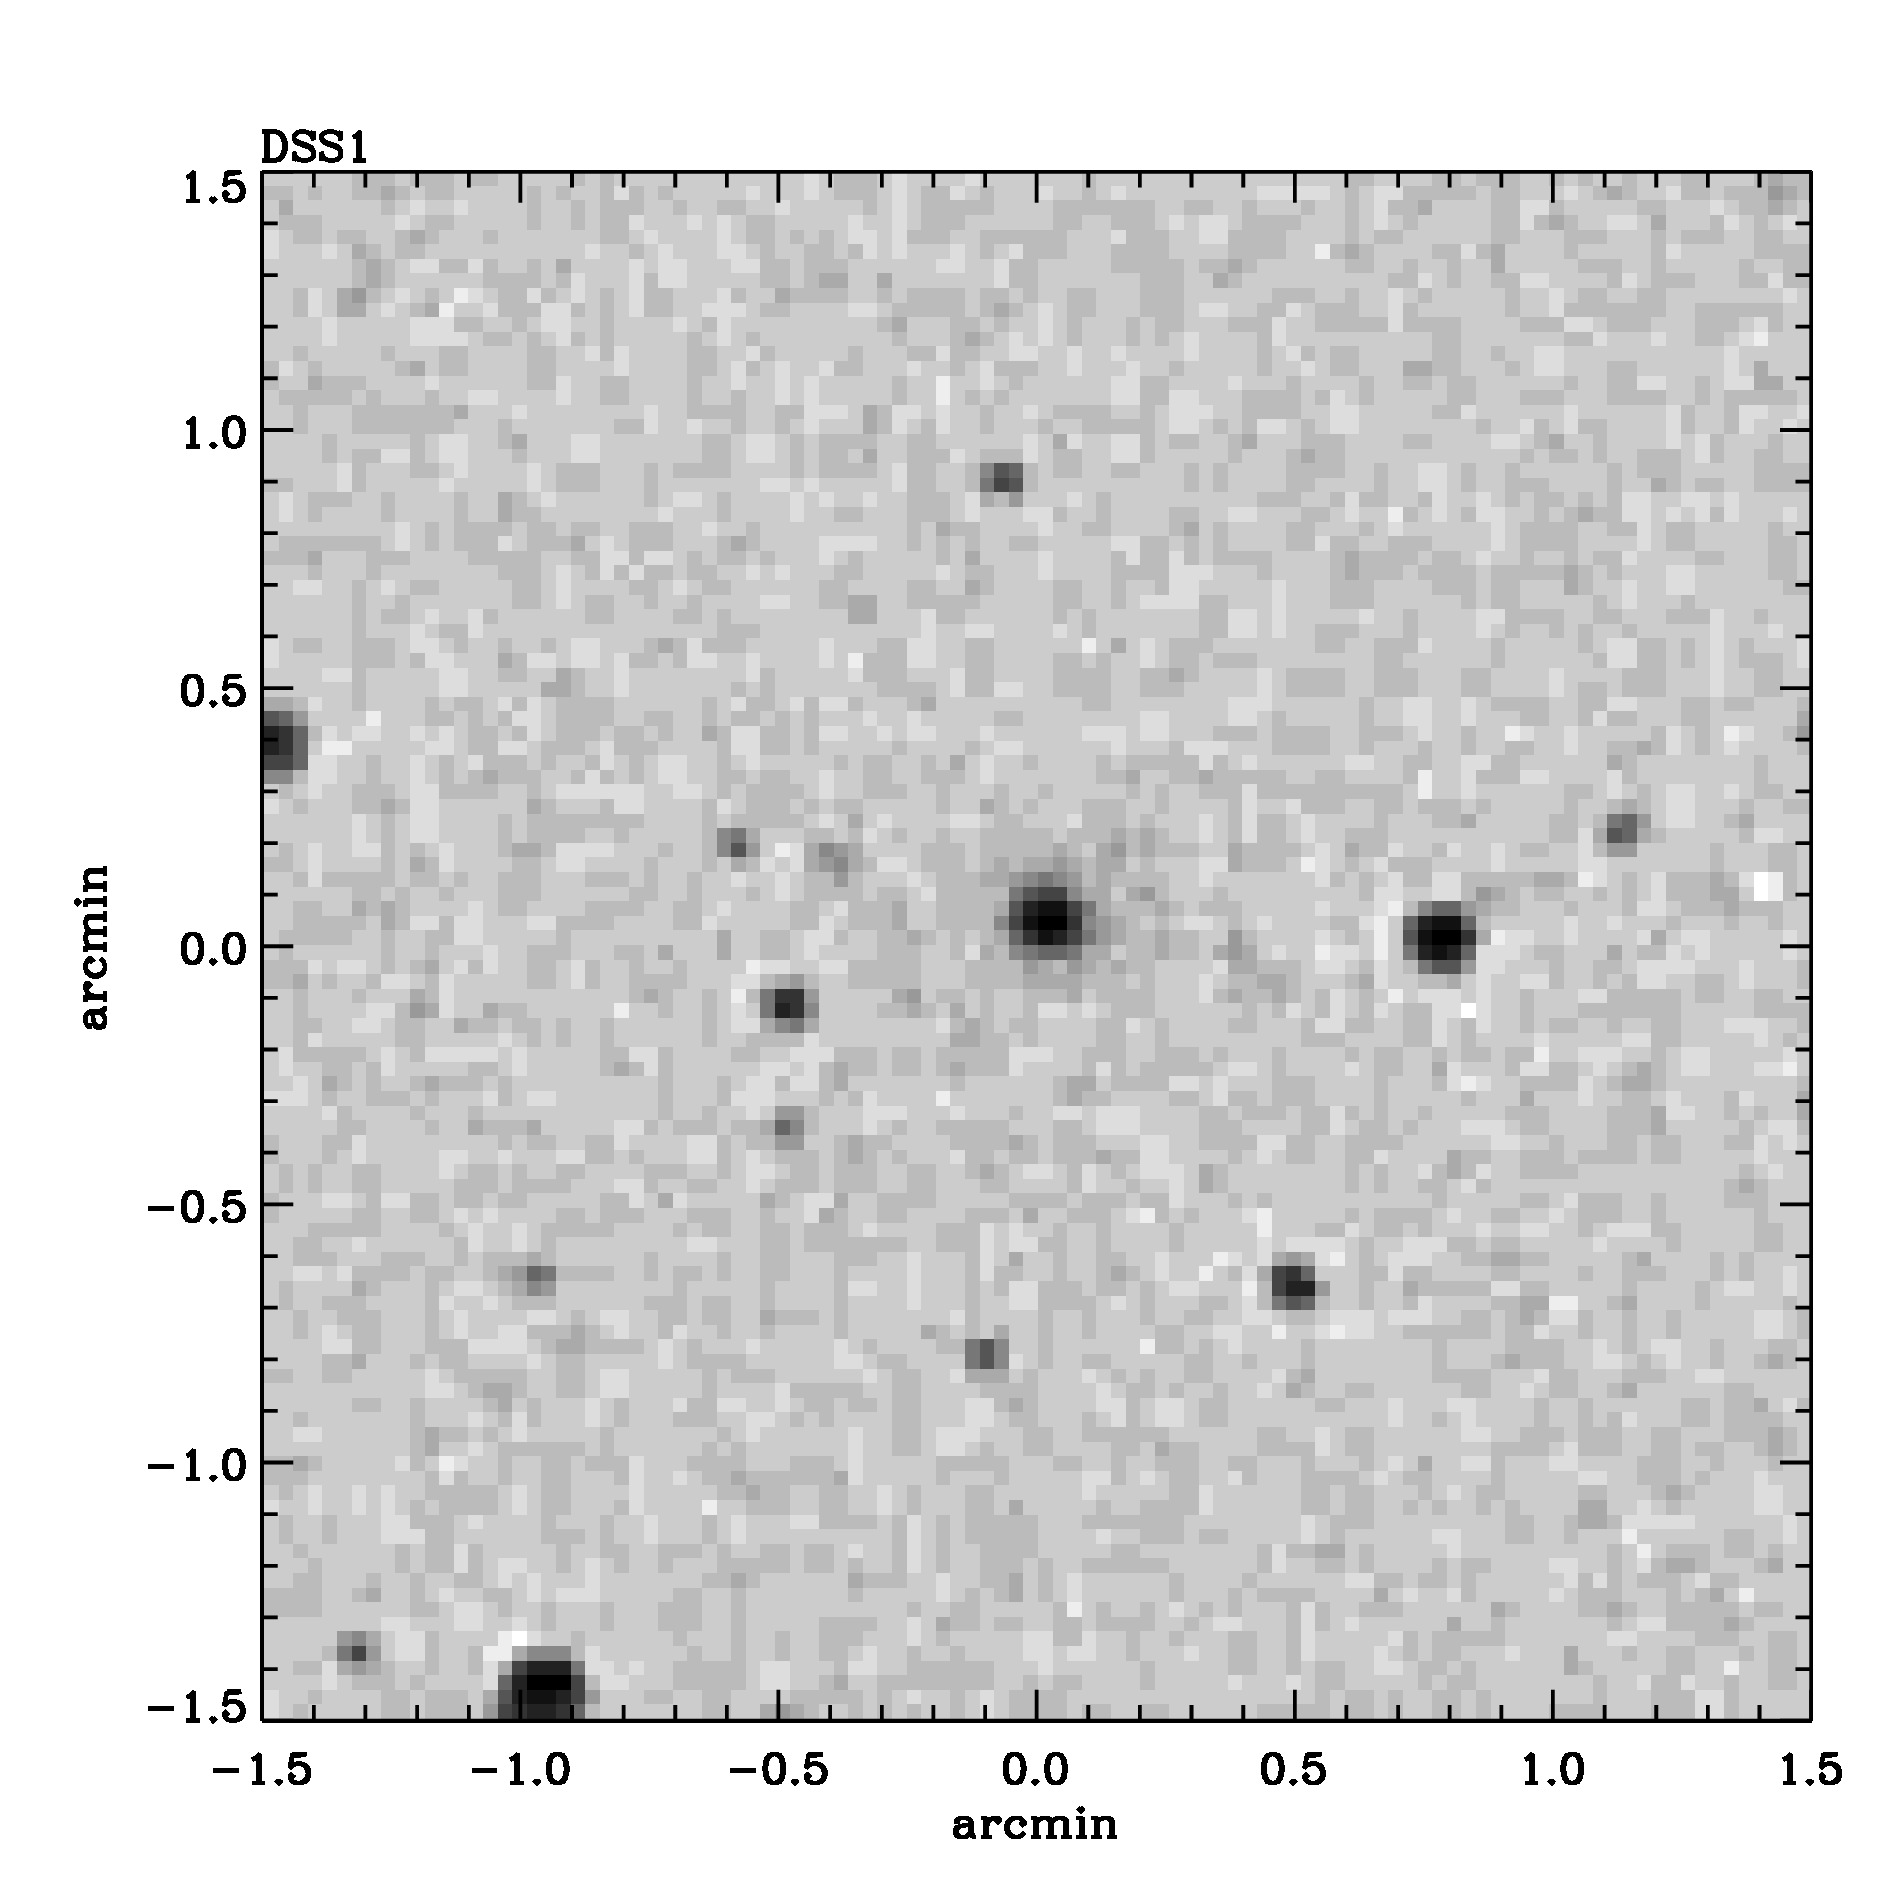 Optical image for SWIFT J2204.7+0337